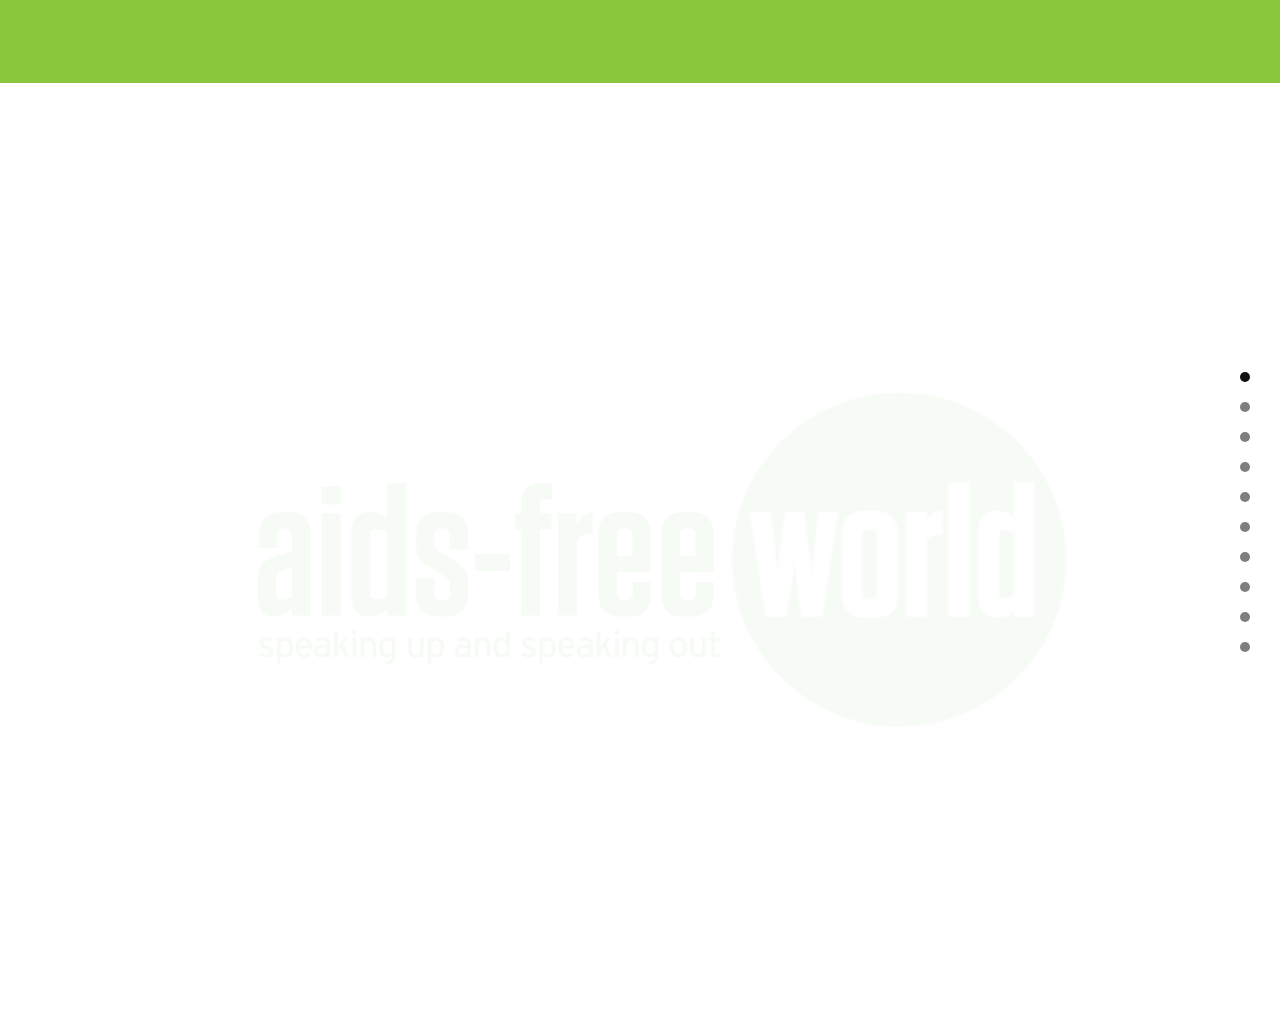 aidsfreeworld.org